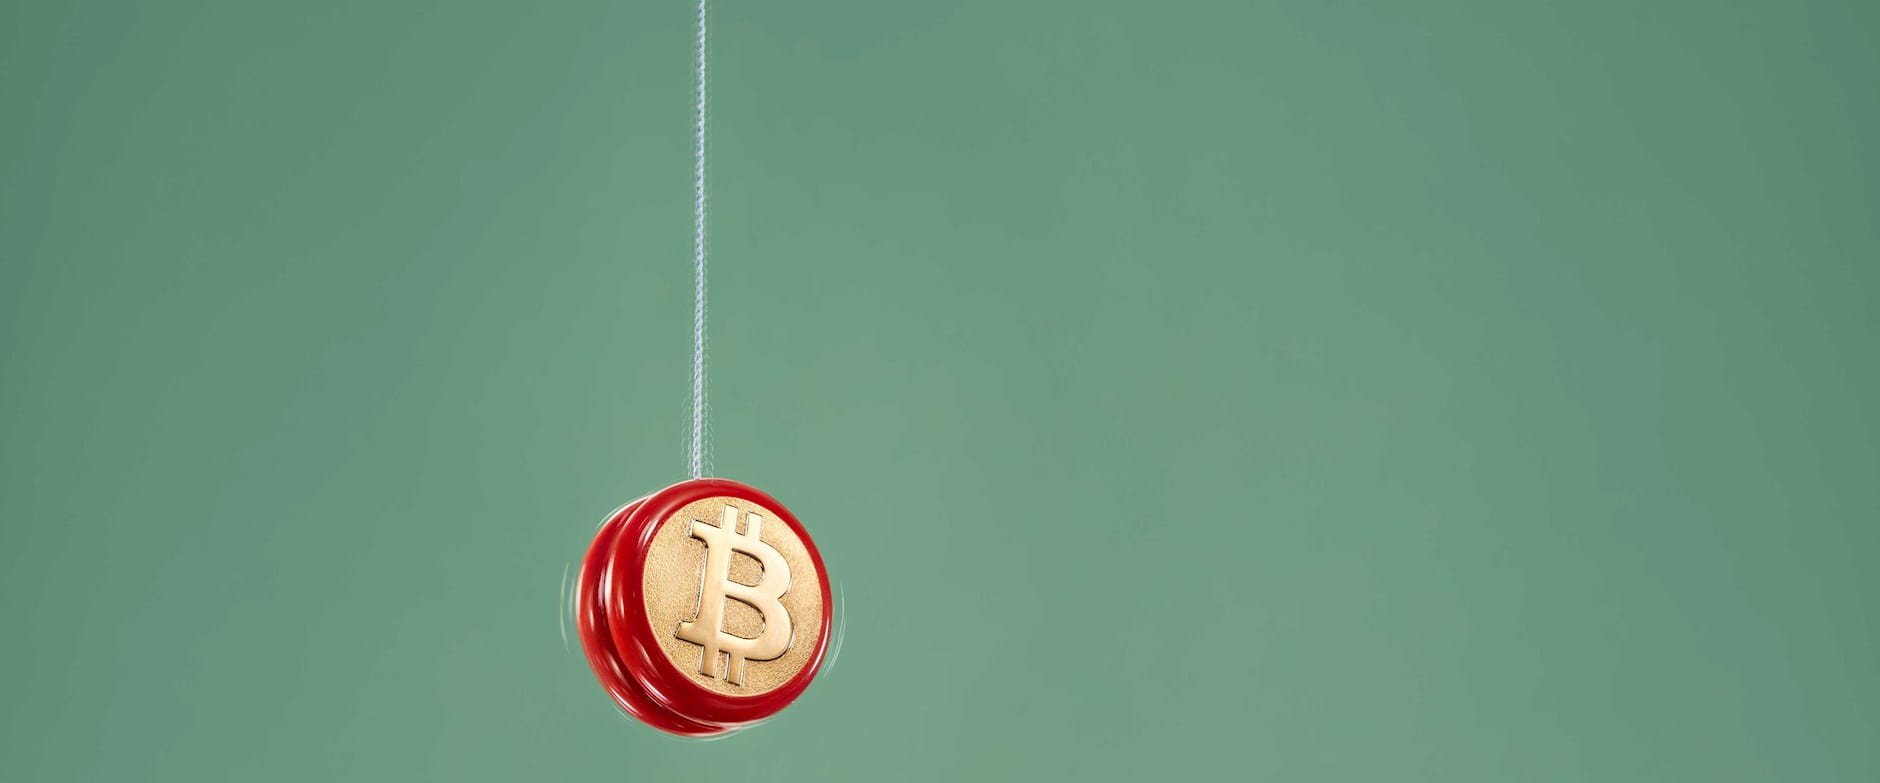 Yo-yo with Bitcoin symbol